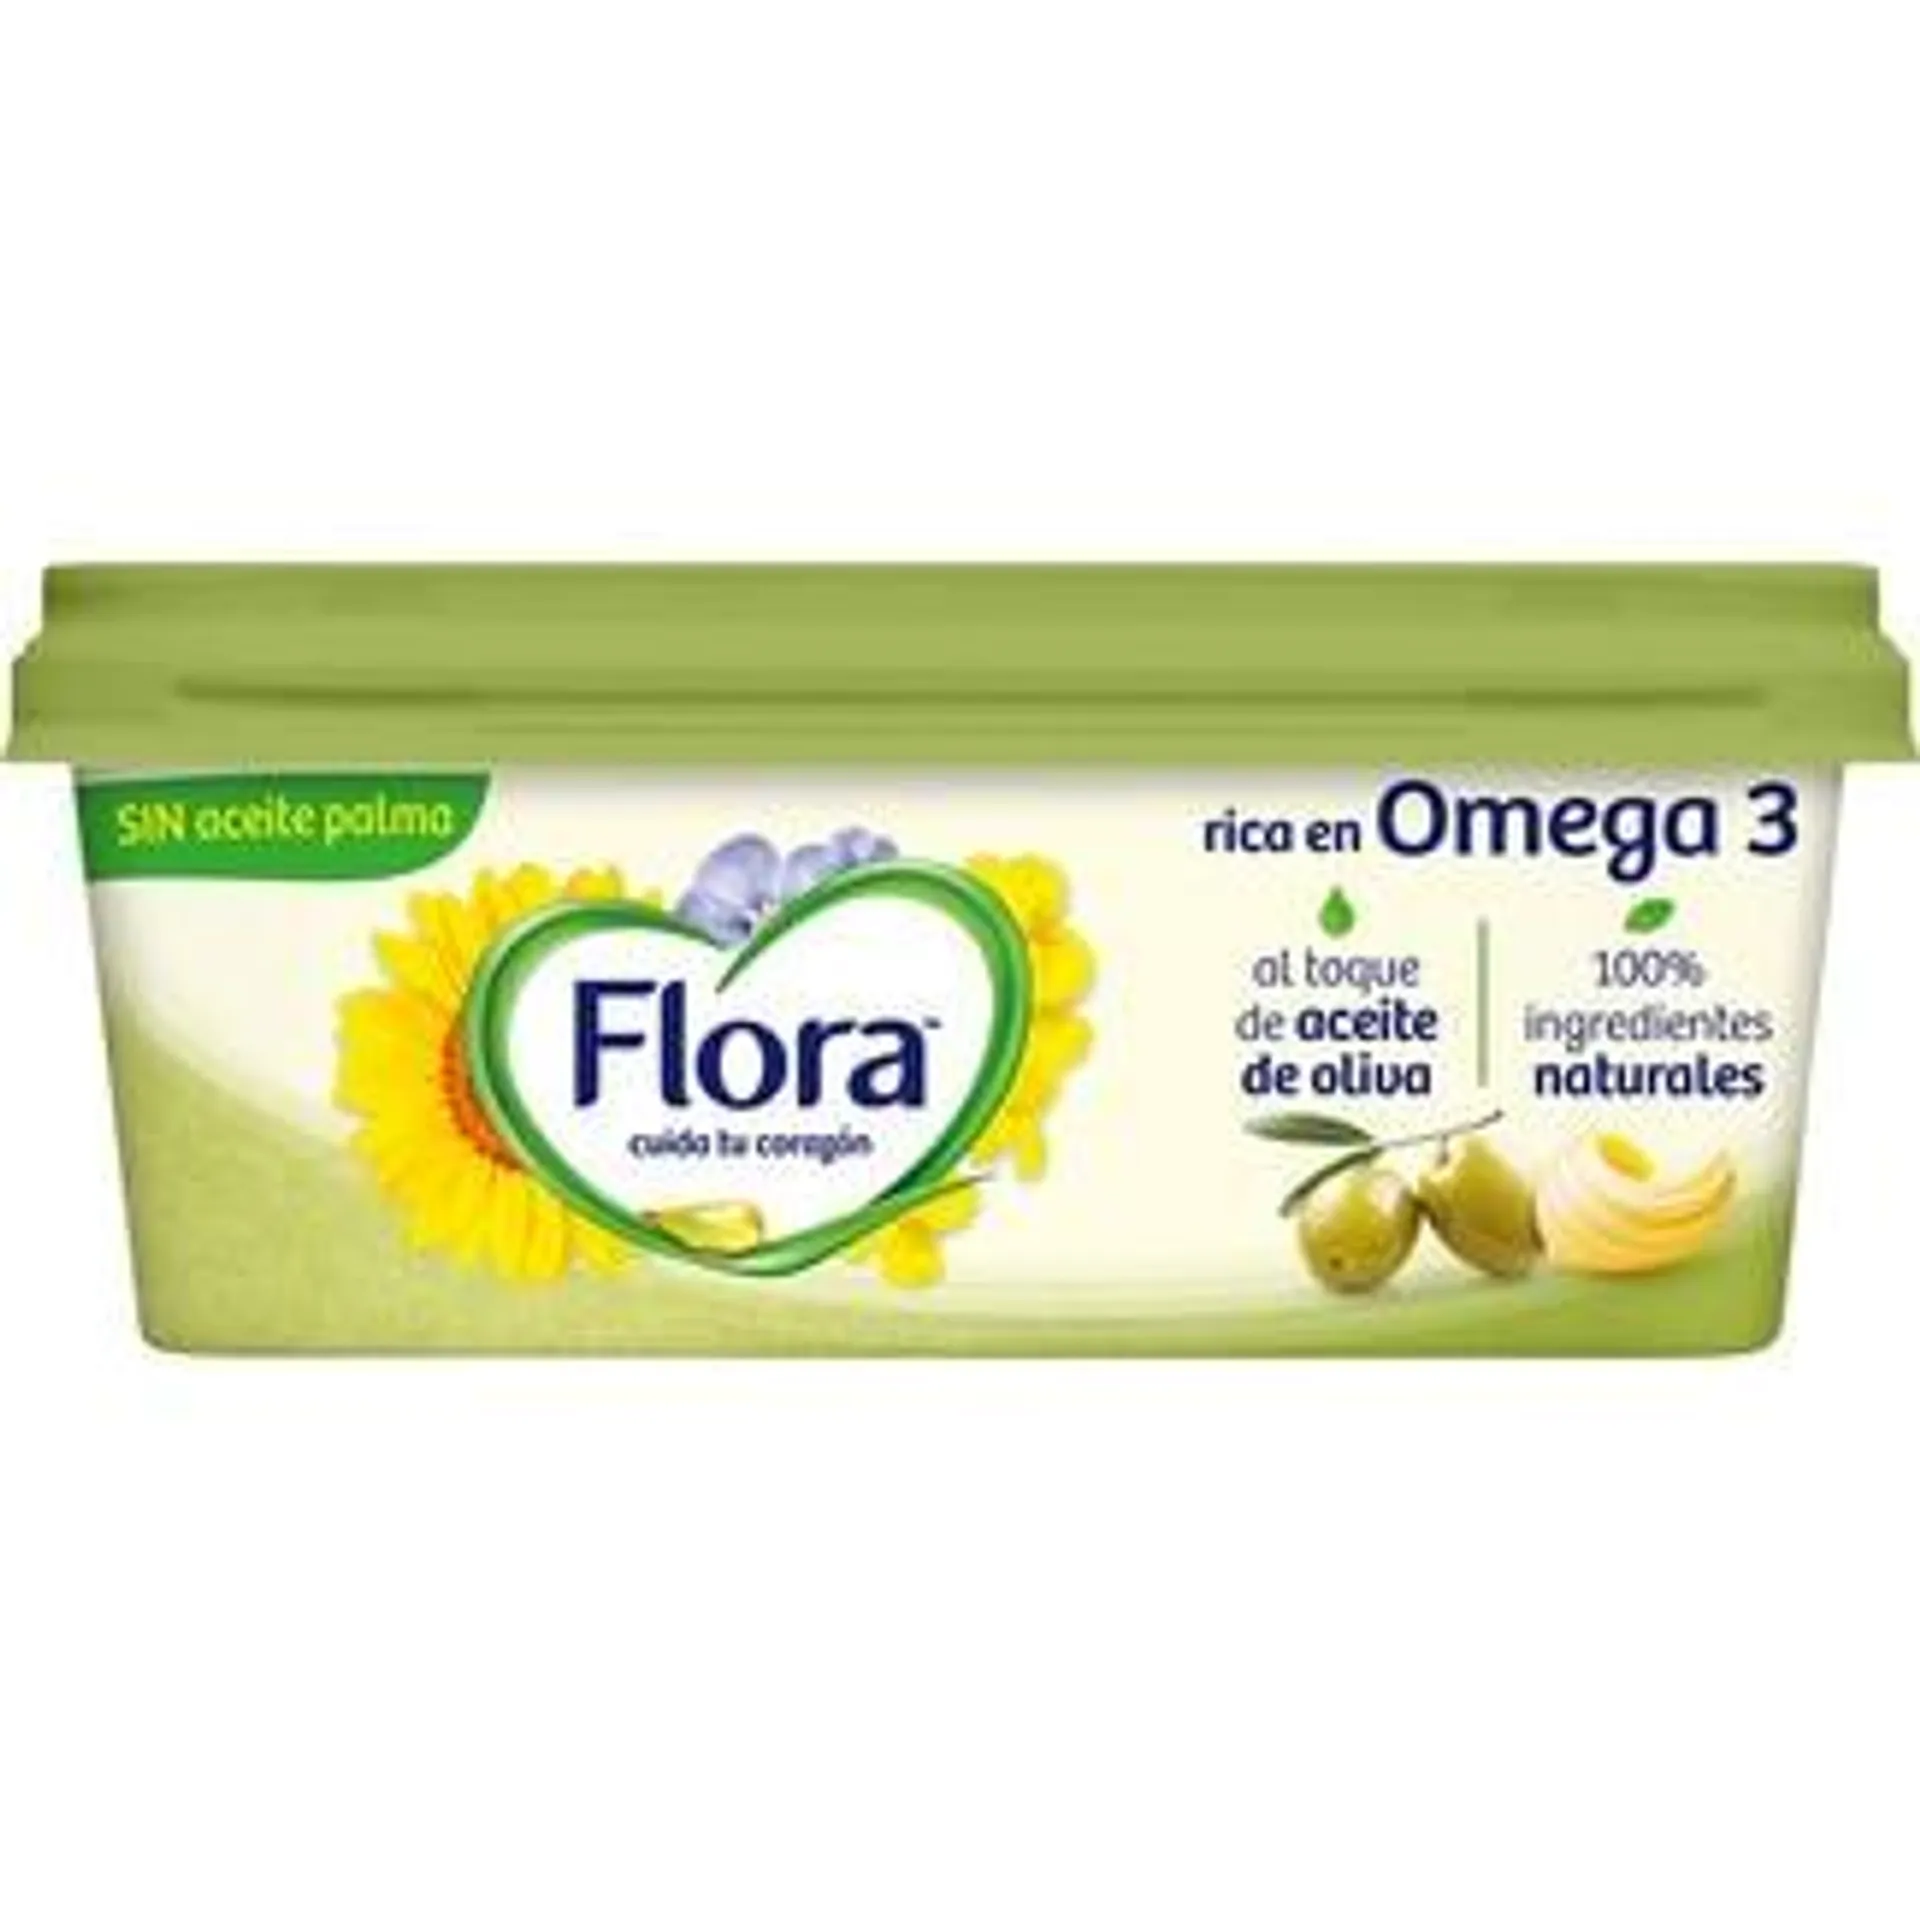 FLORA margarina rica en omega 3 al toque de aceite de oliva sin aceite de palma tarrina 225 g sin gluten sin lactosa